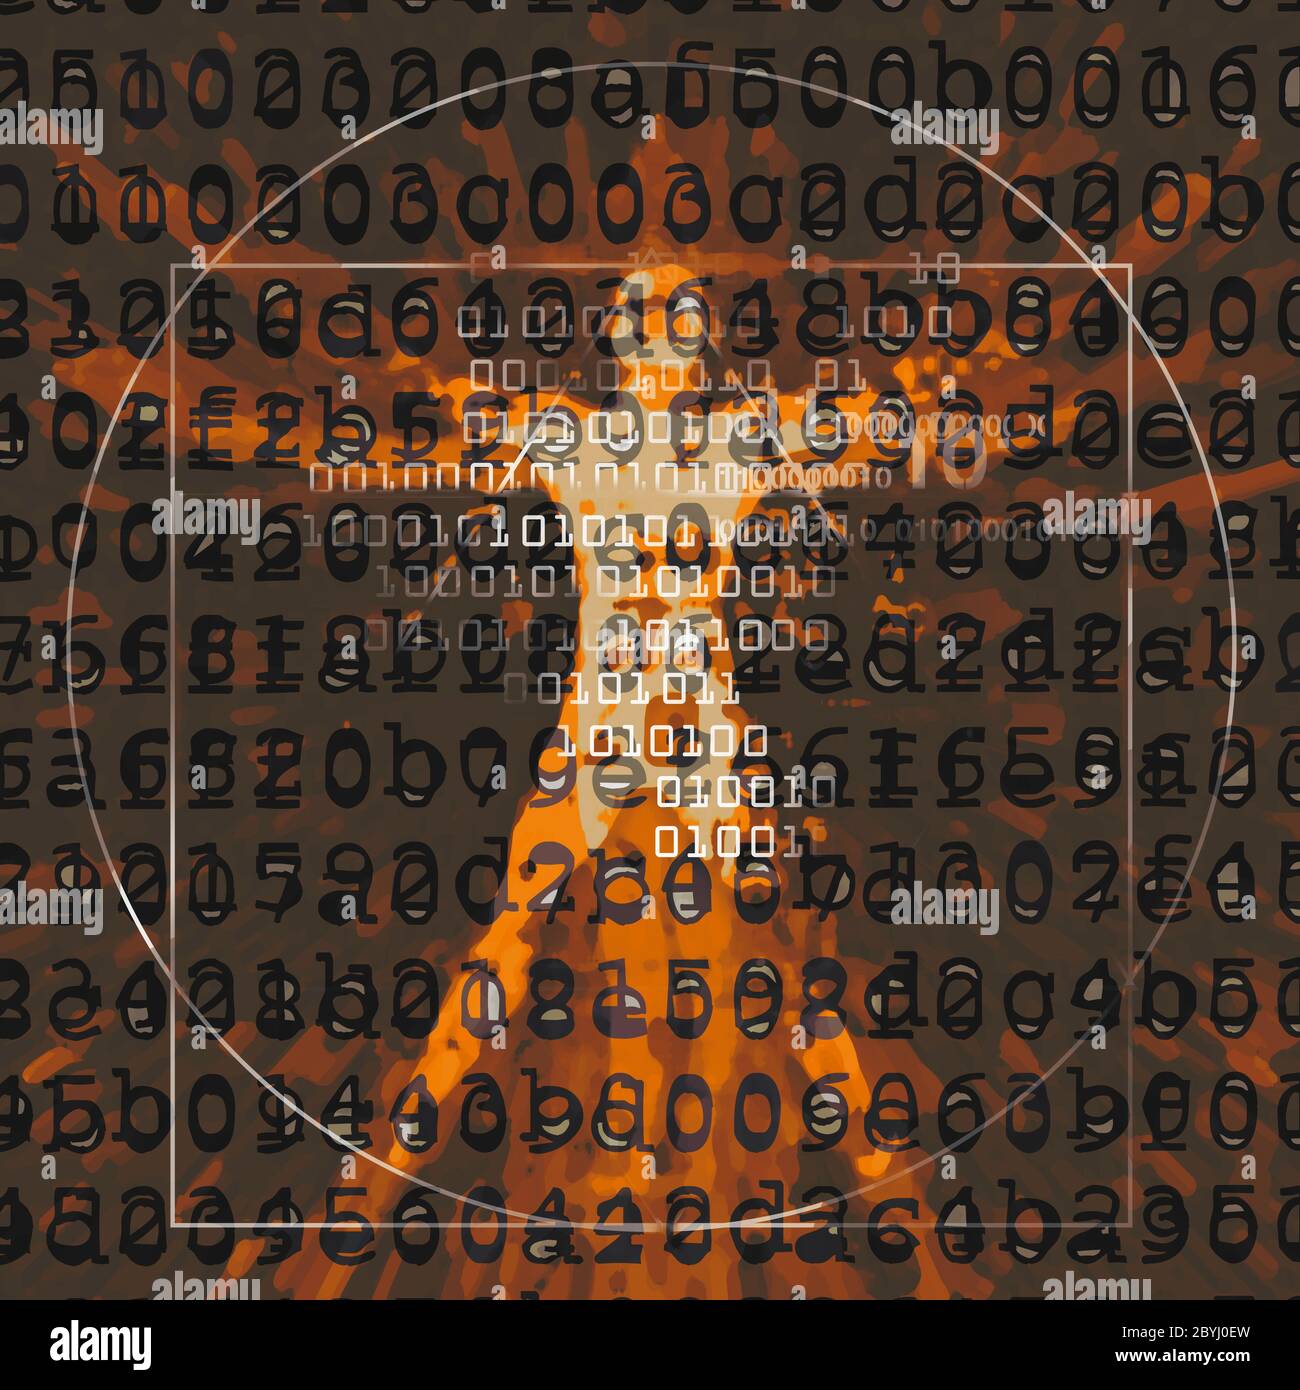 Modern Vitruvian man with destroyed letters and binary codes. Futuristic grunge stylized Illustration of vitruvian man. Stock Photo